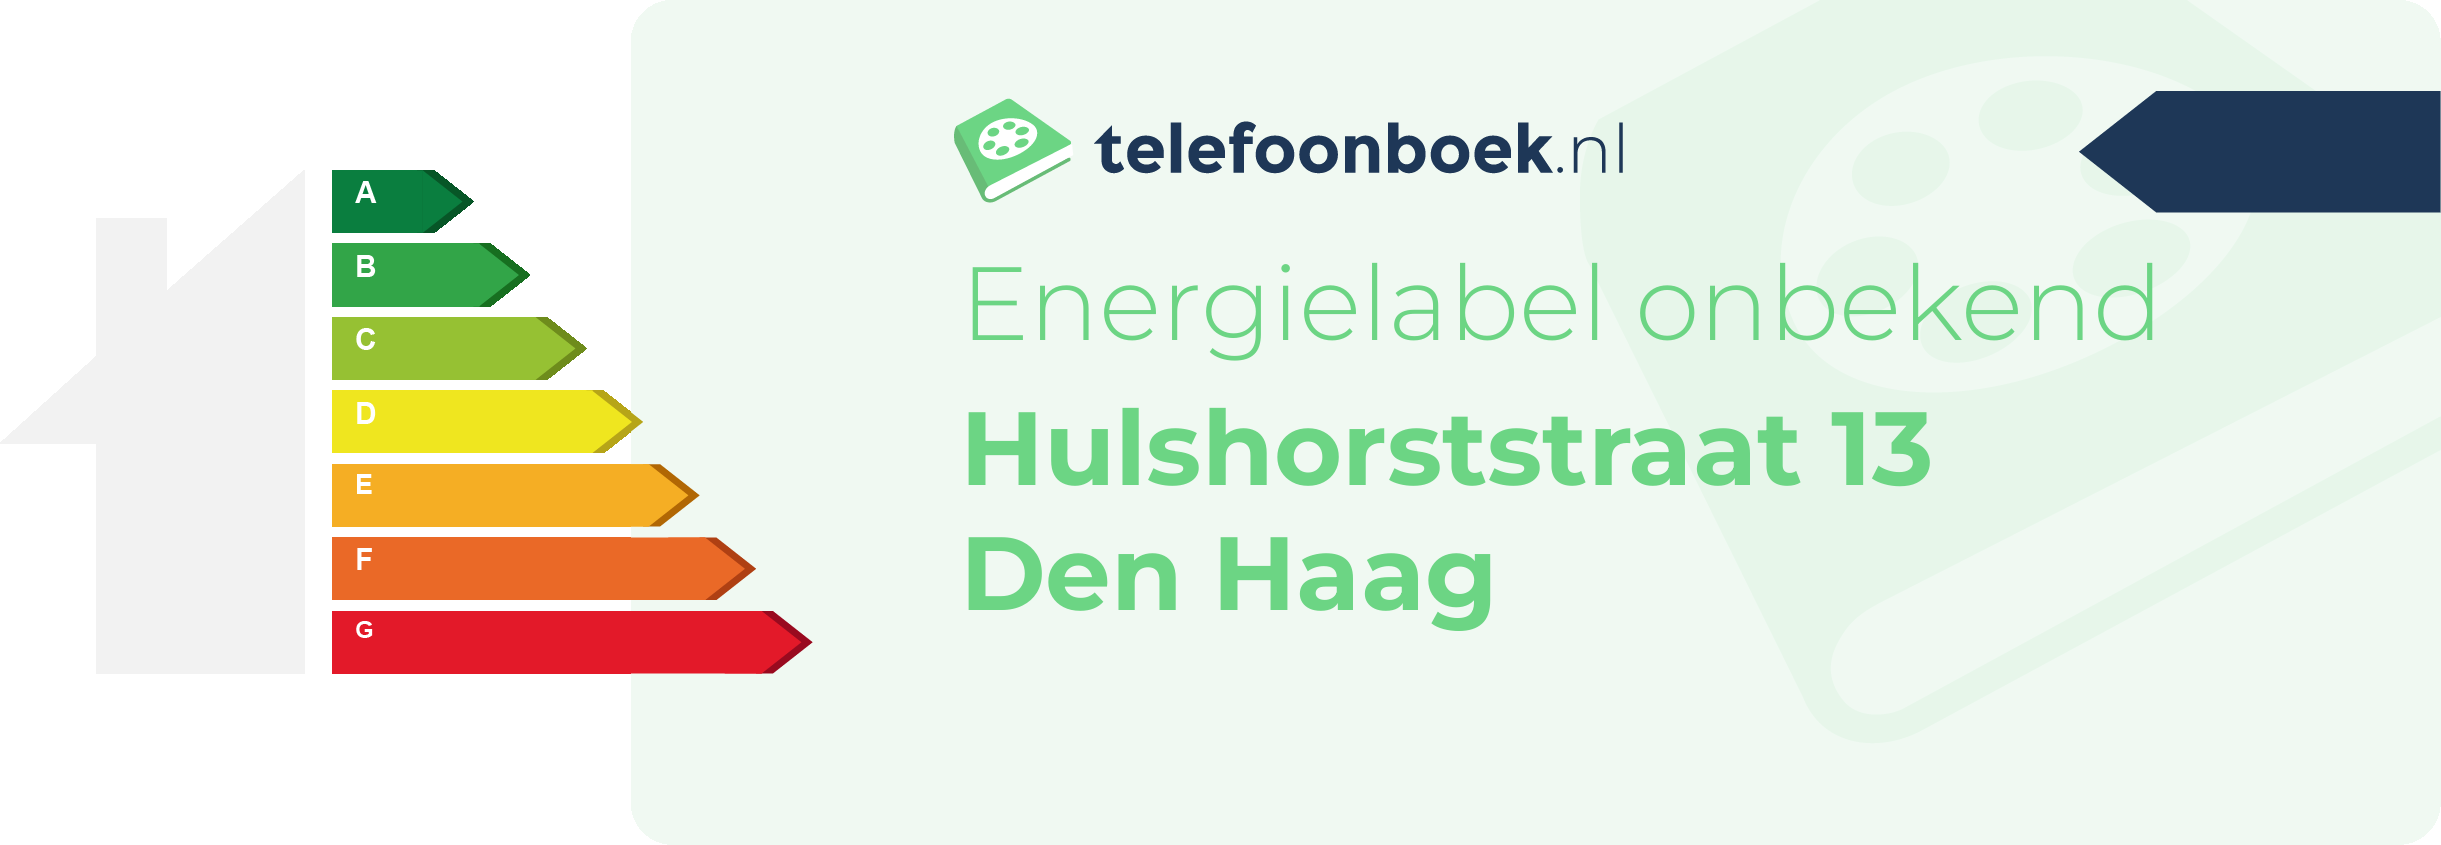 Energielabel Hulshorststraat 13 Den Haag